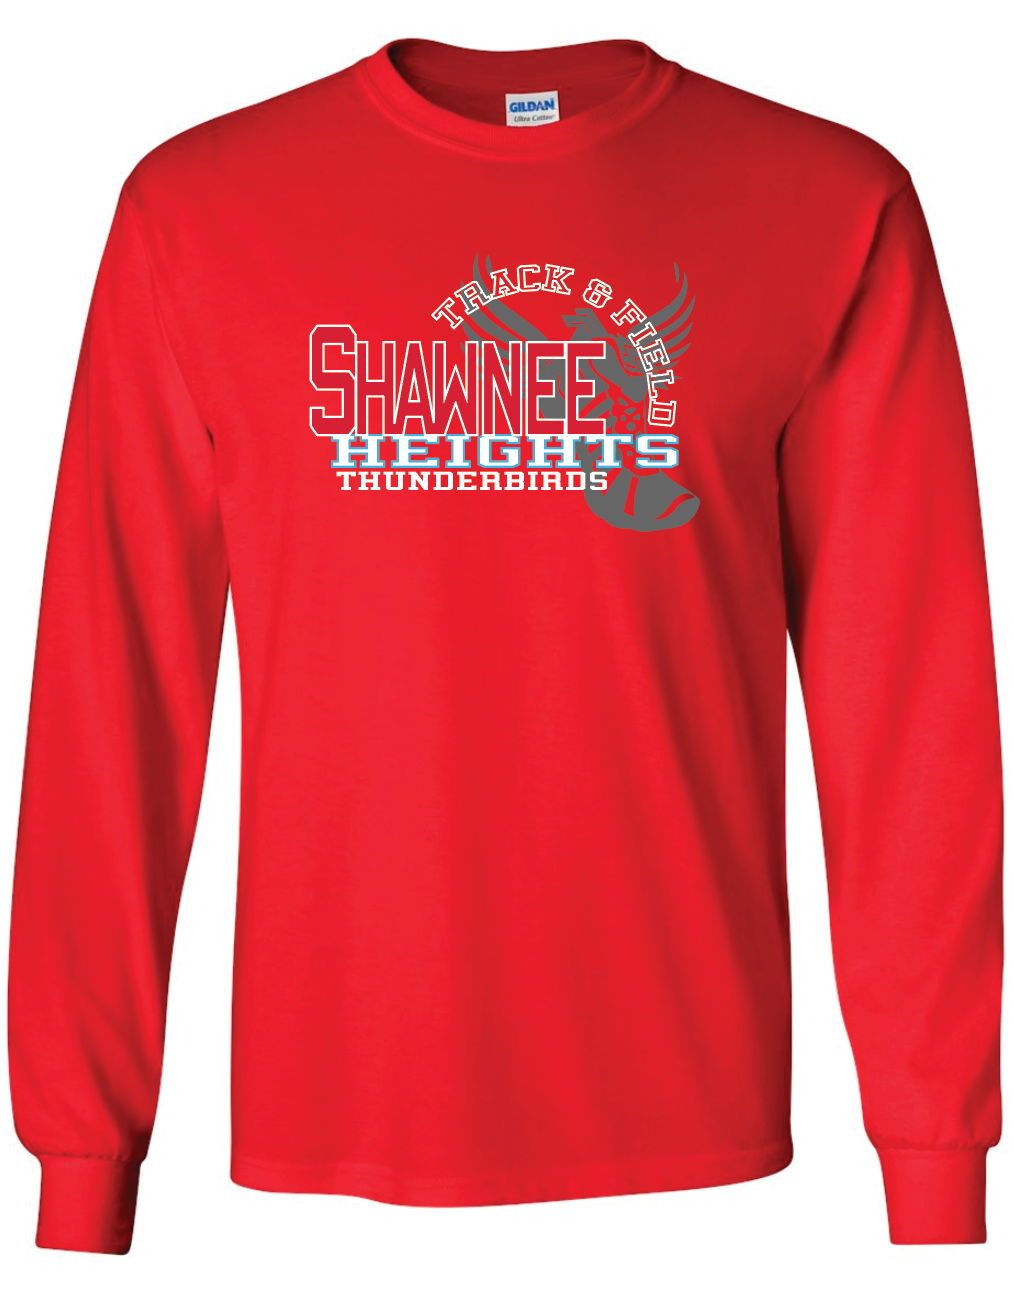 Shawnee Heights Track & Field Gildan Ultra Cotton Long Sleeve T-Shirt